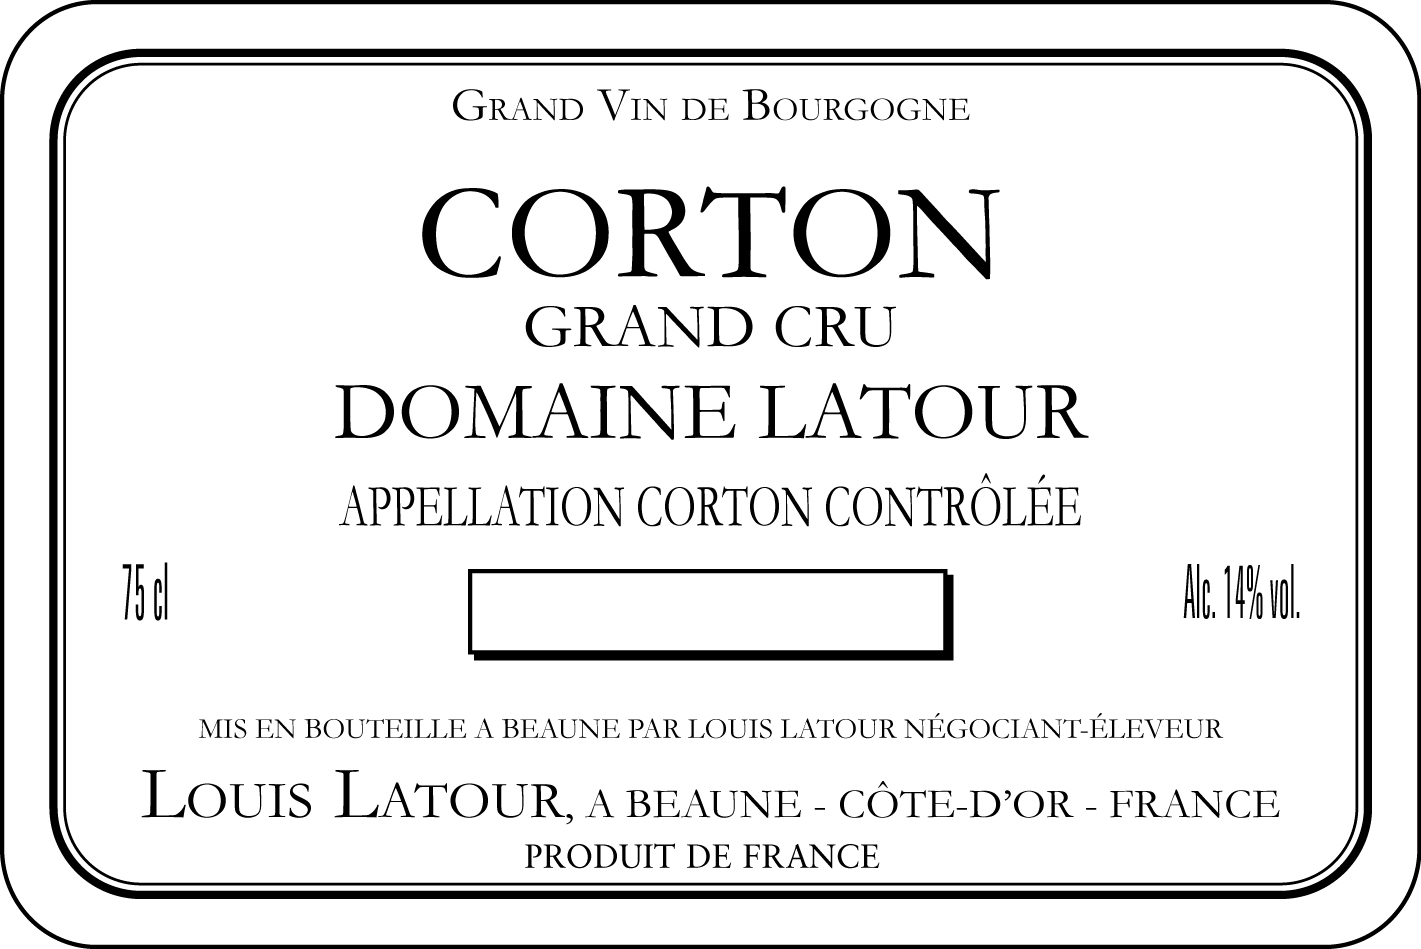 2010 Domaine Louis Latour Corton Grand Cru Domaine Latour - click image for full description